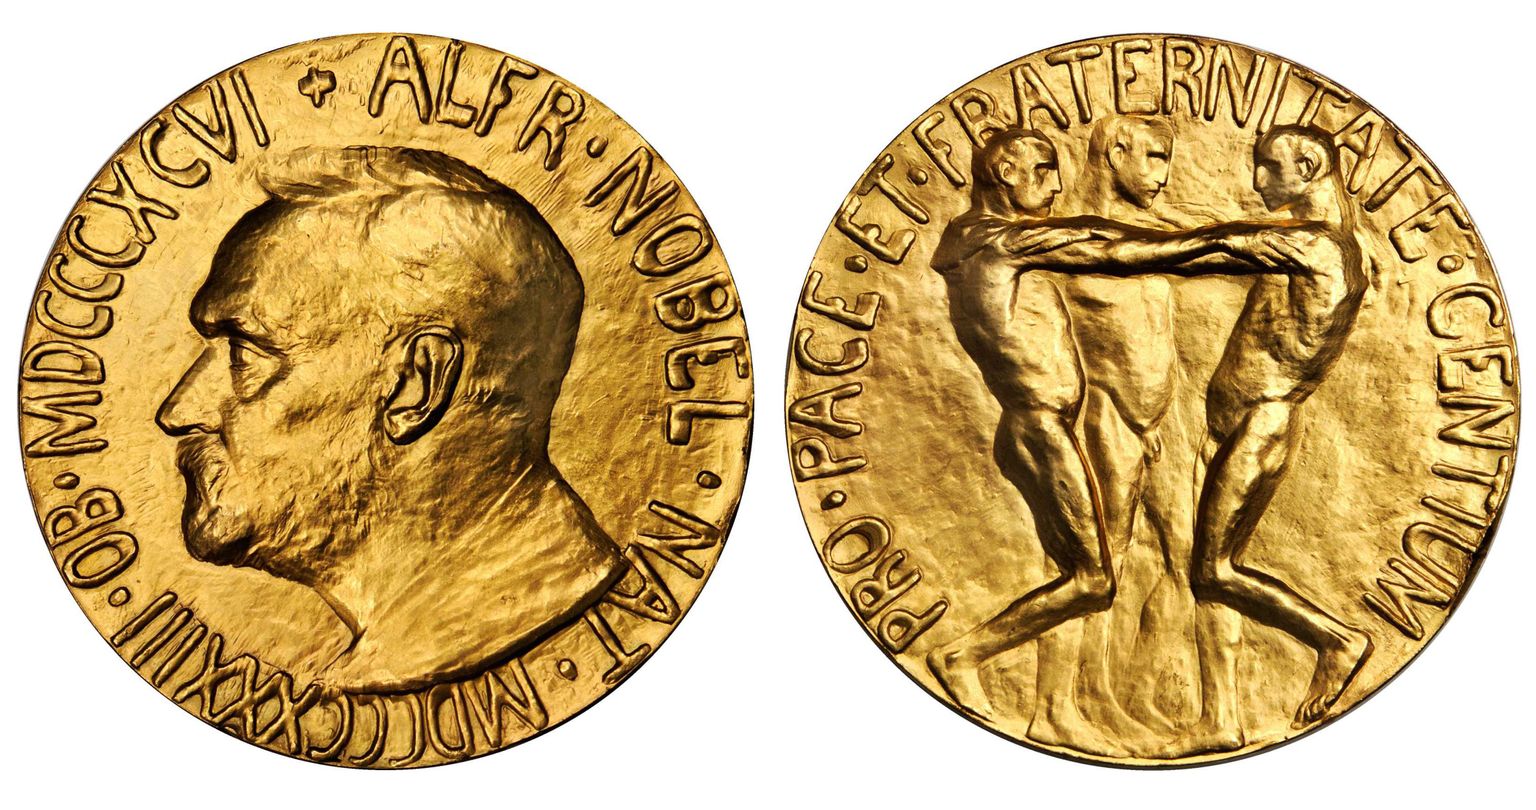 Adolf Hitler Oli Nobeli Rahupreemia Kandidaat Huvitavaid Fakte Nobeli